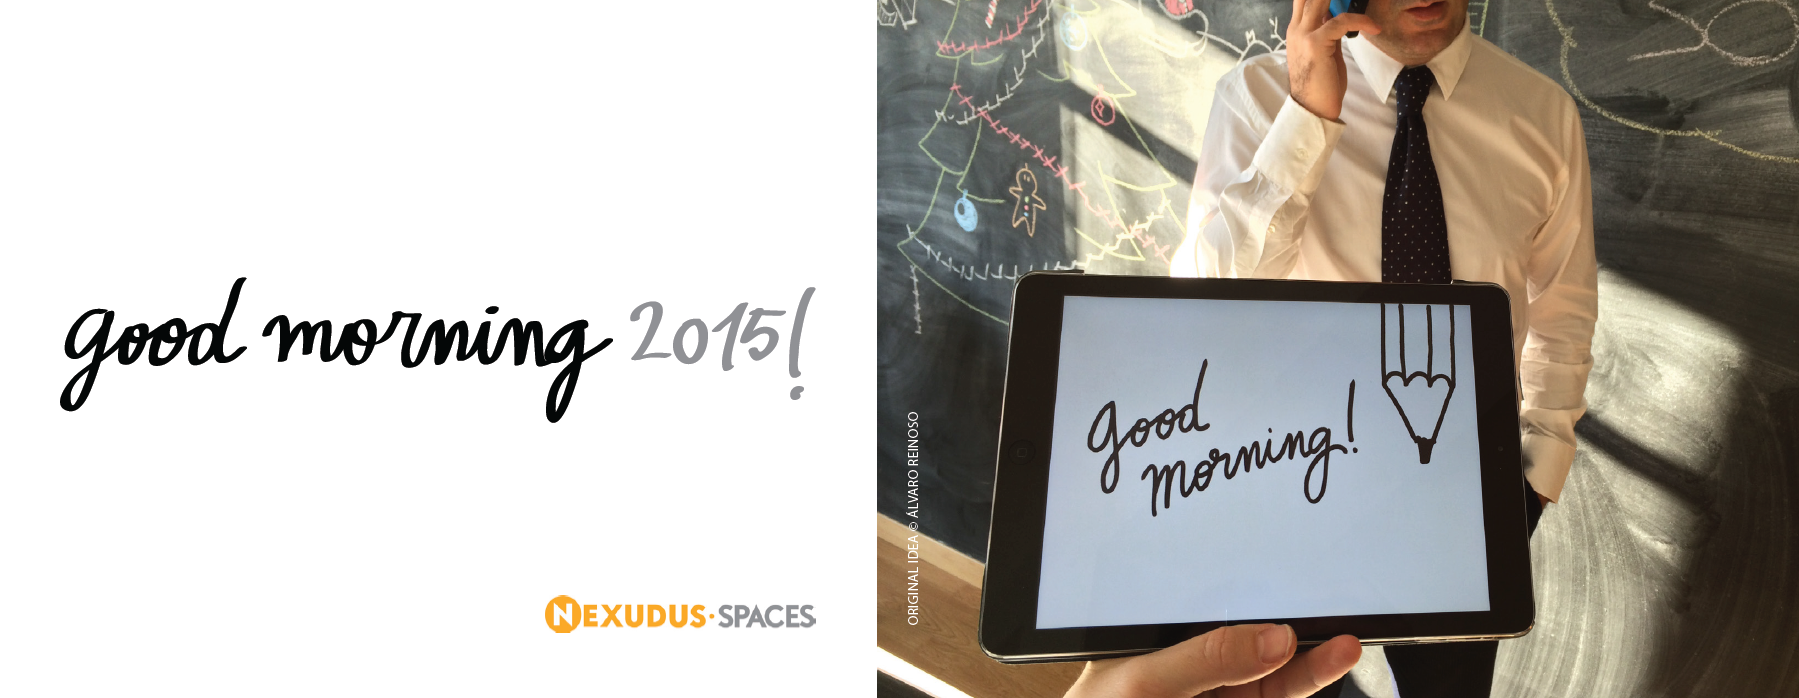 Nexudus Spaces 2015 wishlist